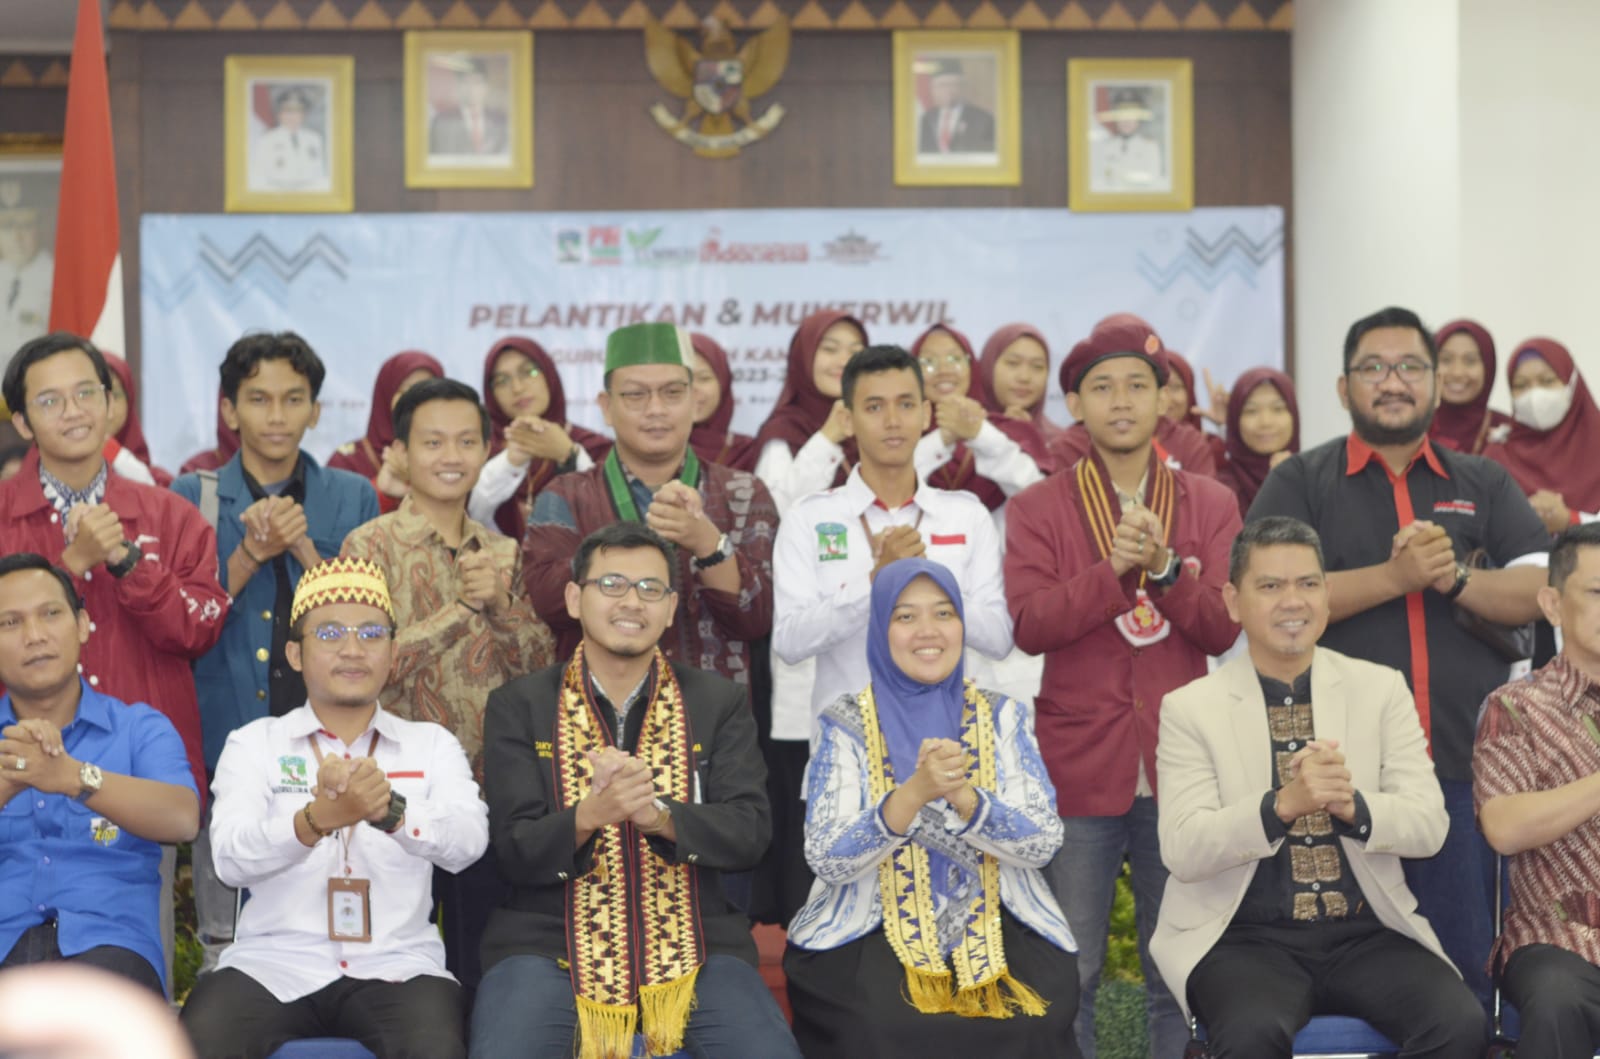 Semangat Hari Kebangkitan Nasional, KAMMI Lampung Laksanakan Pelantikan dan Musyawarah Kerja Wilayah